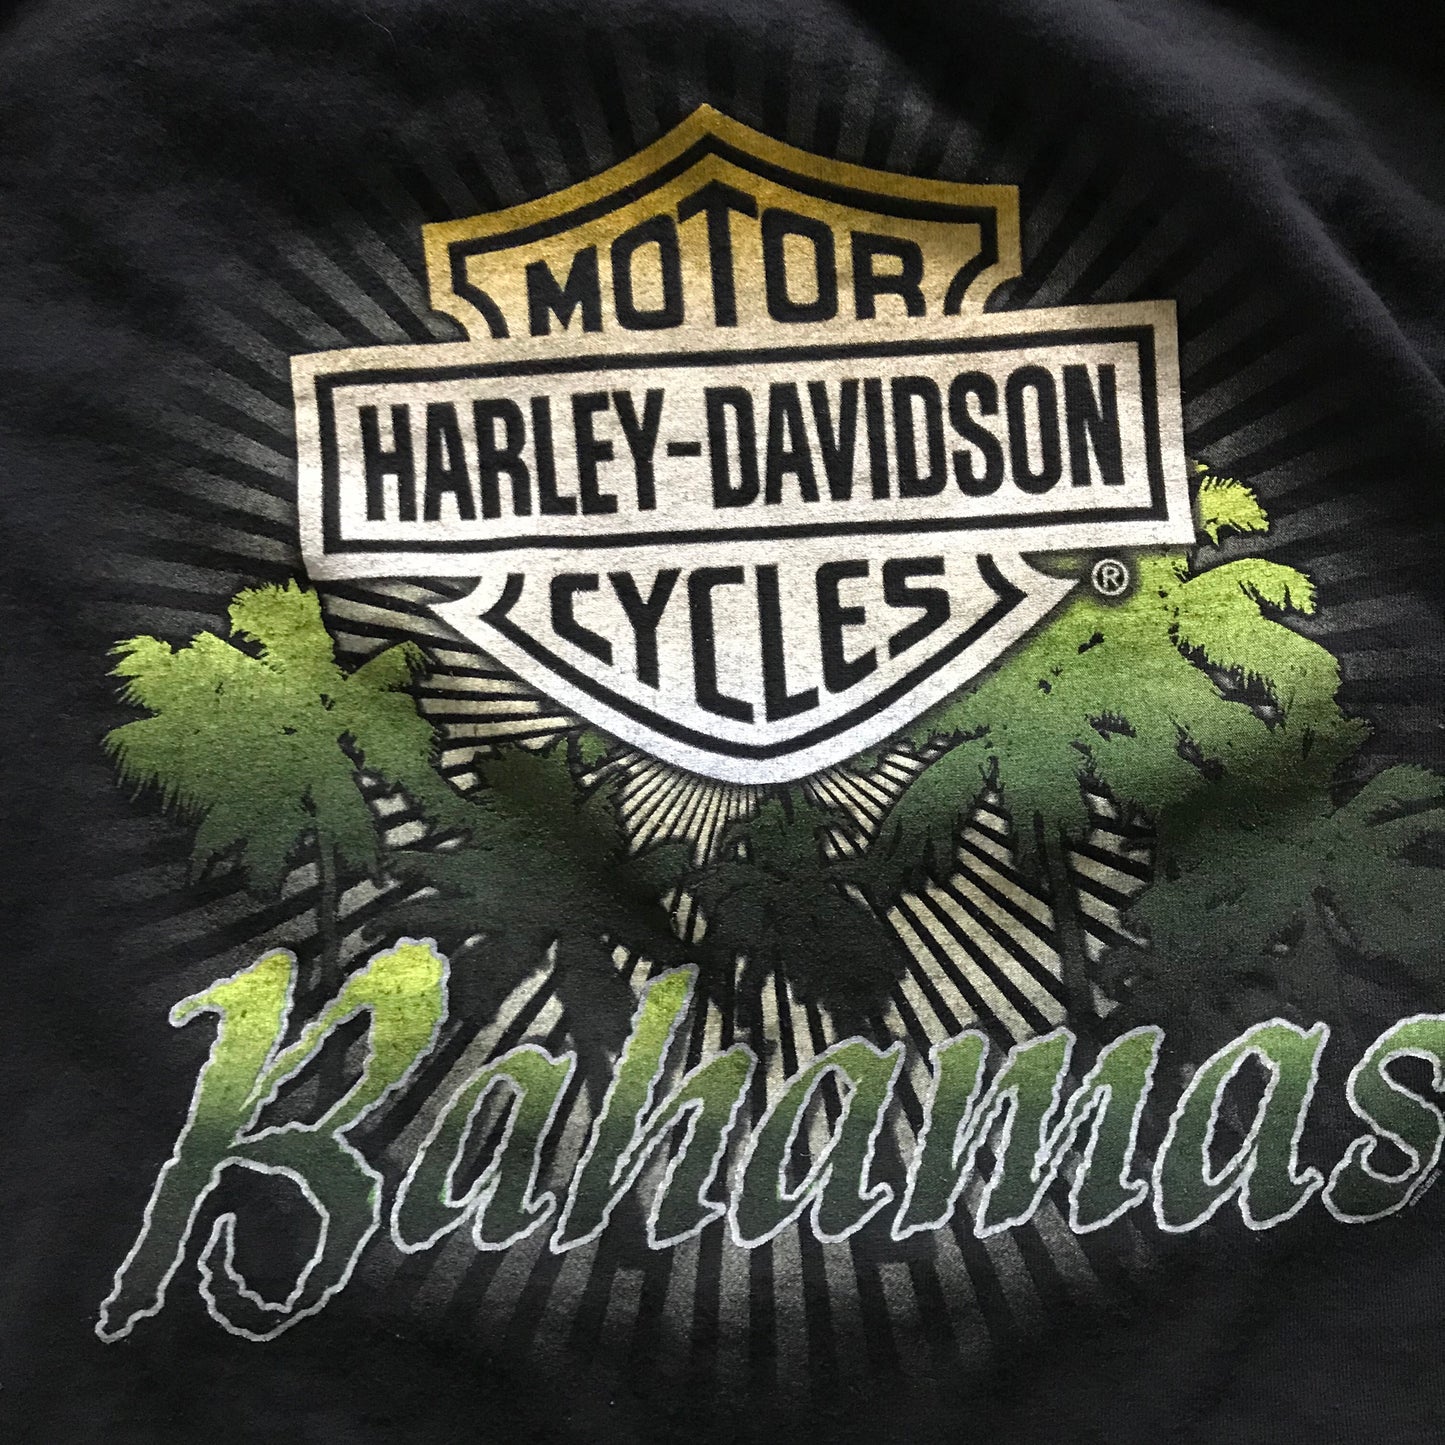 Playera Harley Davidson Bahamas